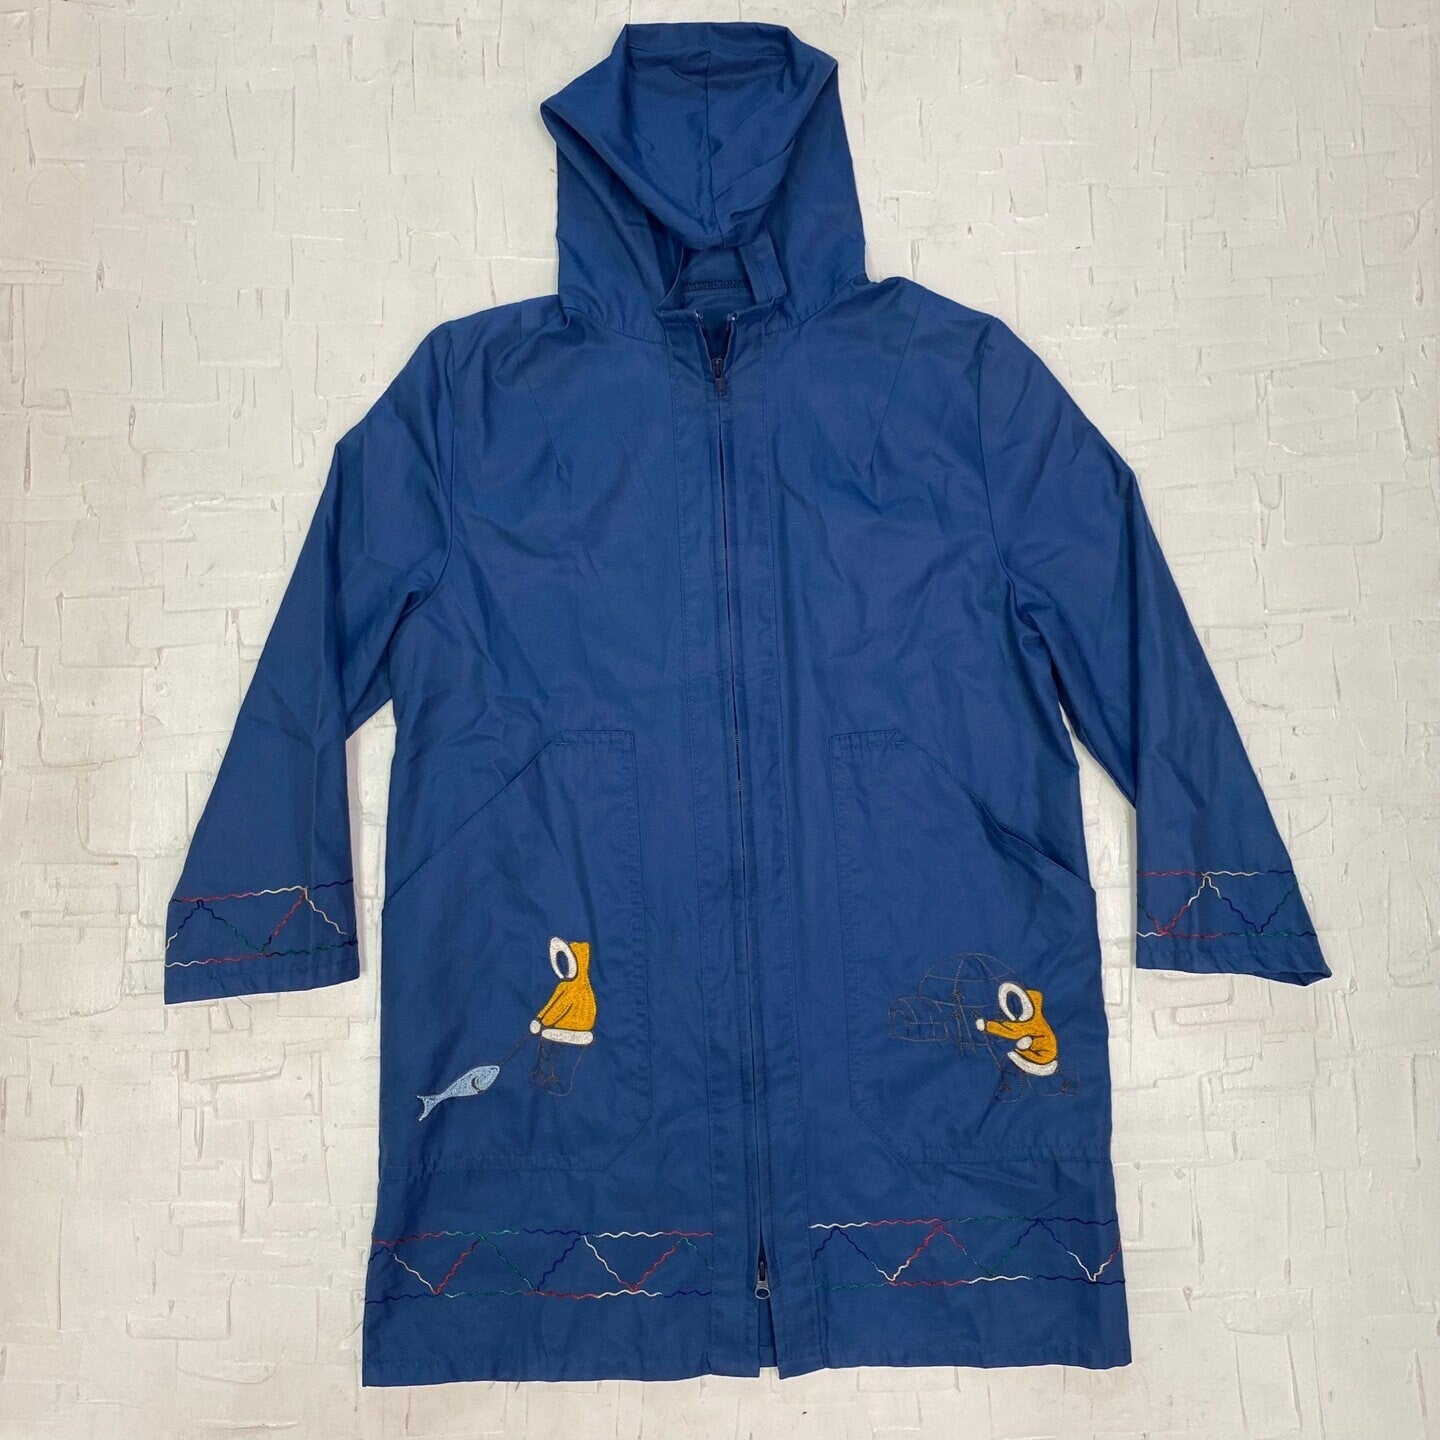 Vintage Handmade Long Jacket | Vintage Windbreaker | Navy Blue | Hooded Long Jacket | Colourful Embroidery | Size Women's L | M-1826